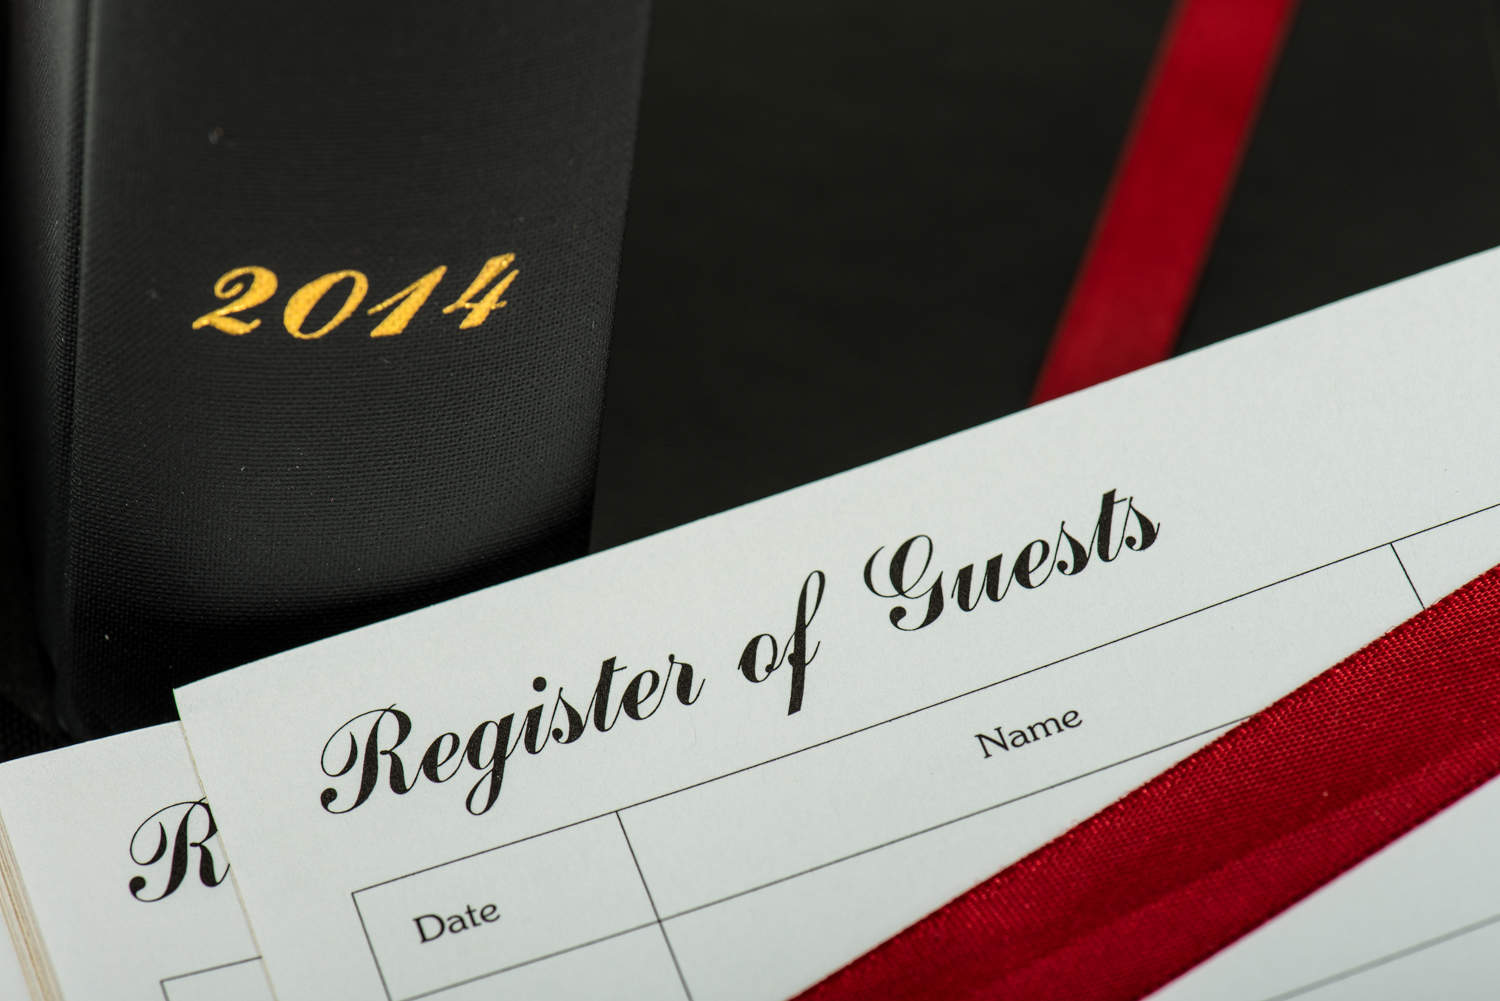 Register of Guests